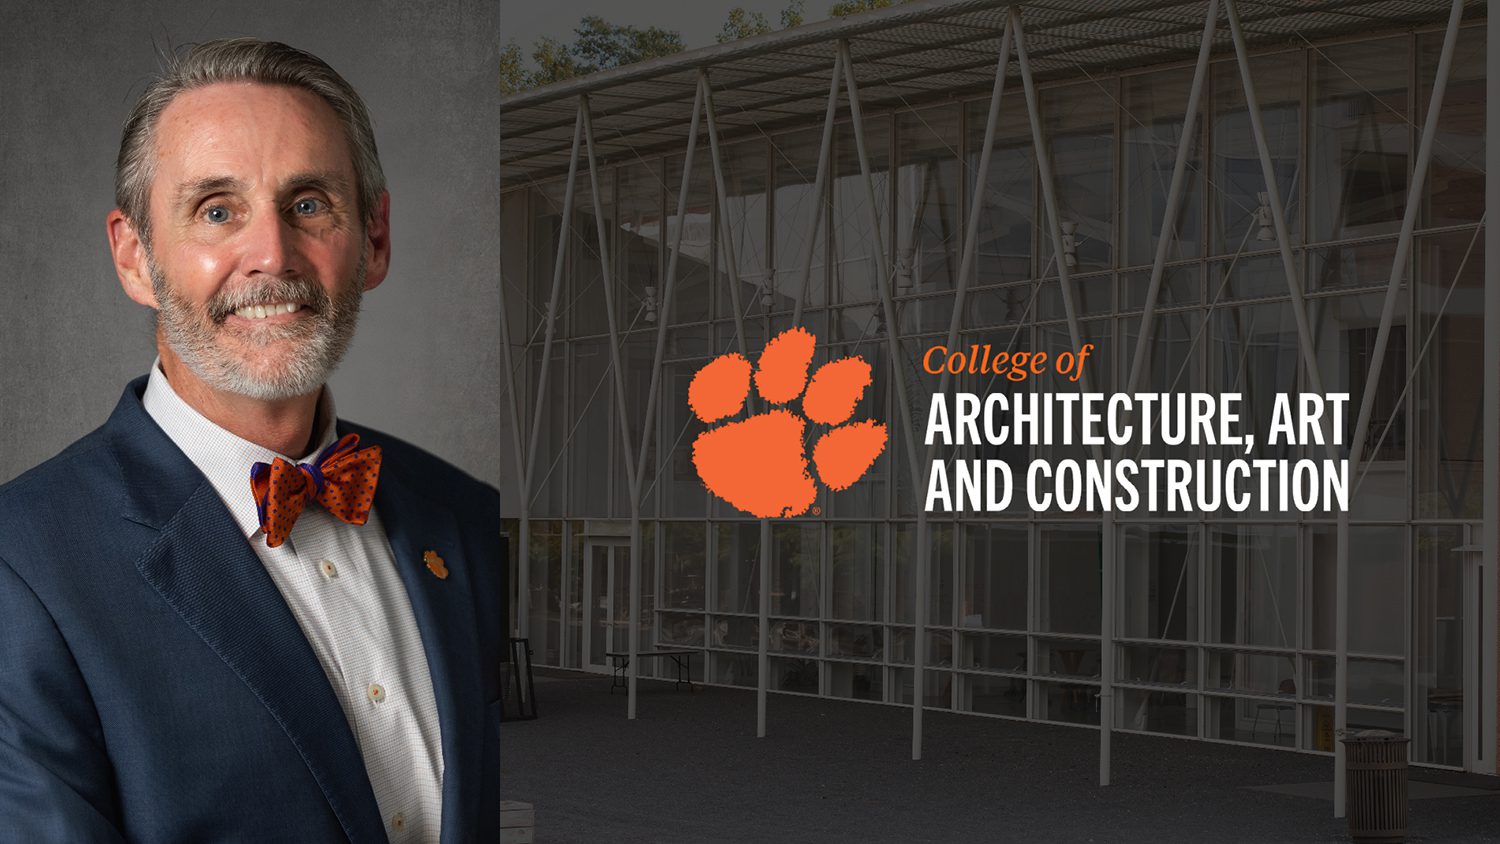 George J. Petersen, interim dean, College of Architecture, Art and Construction at Clemson University